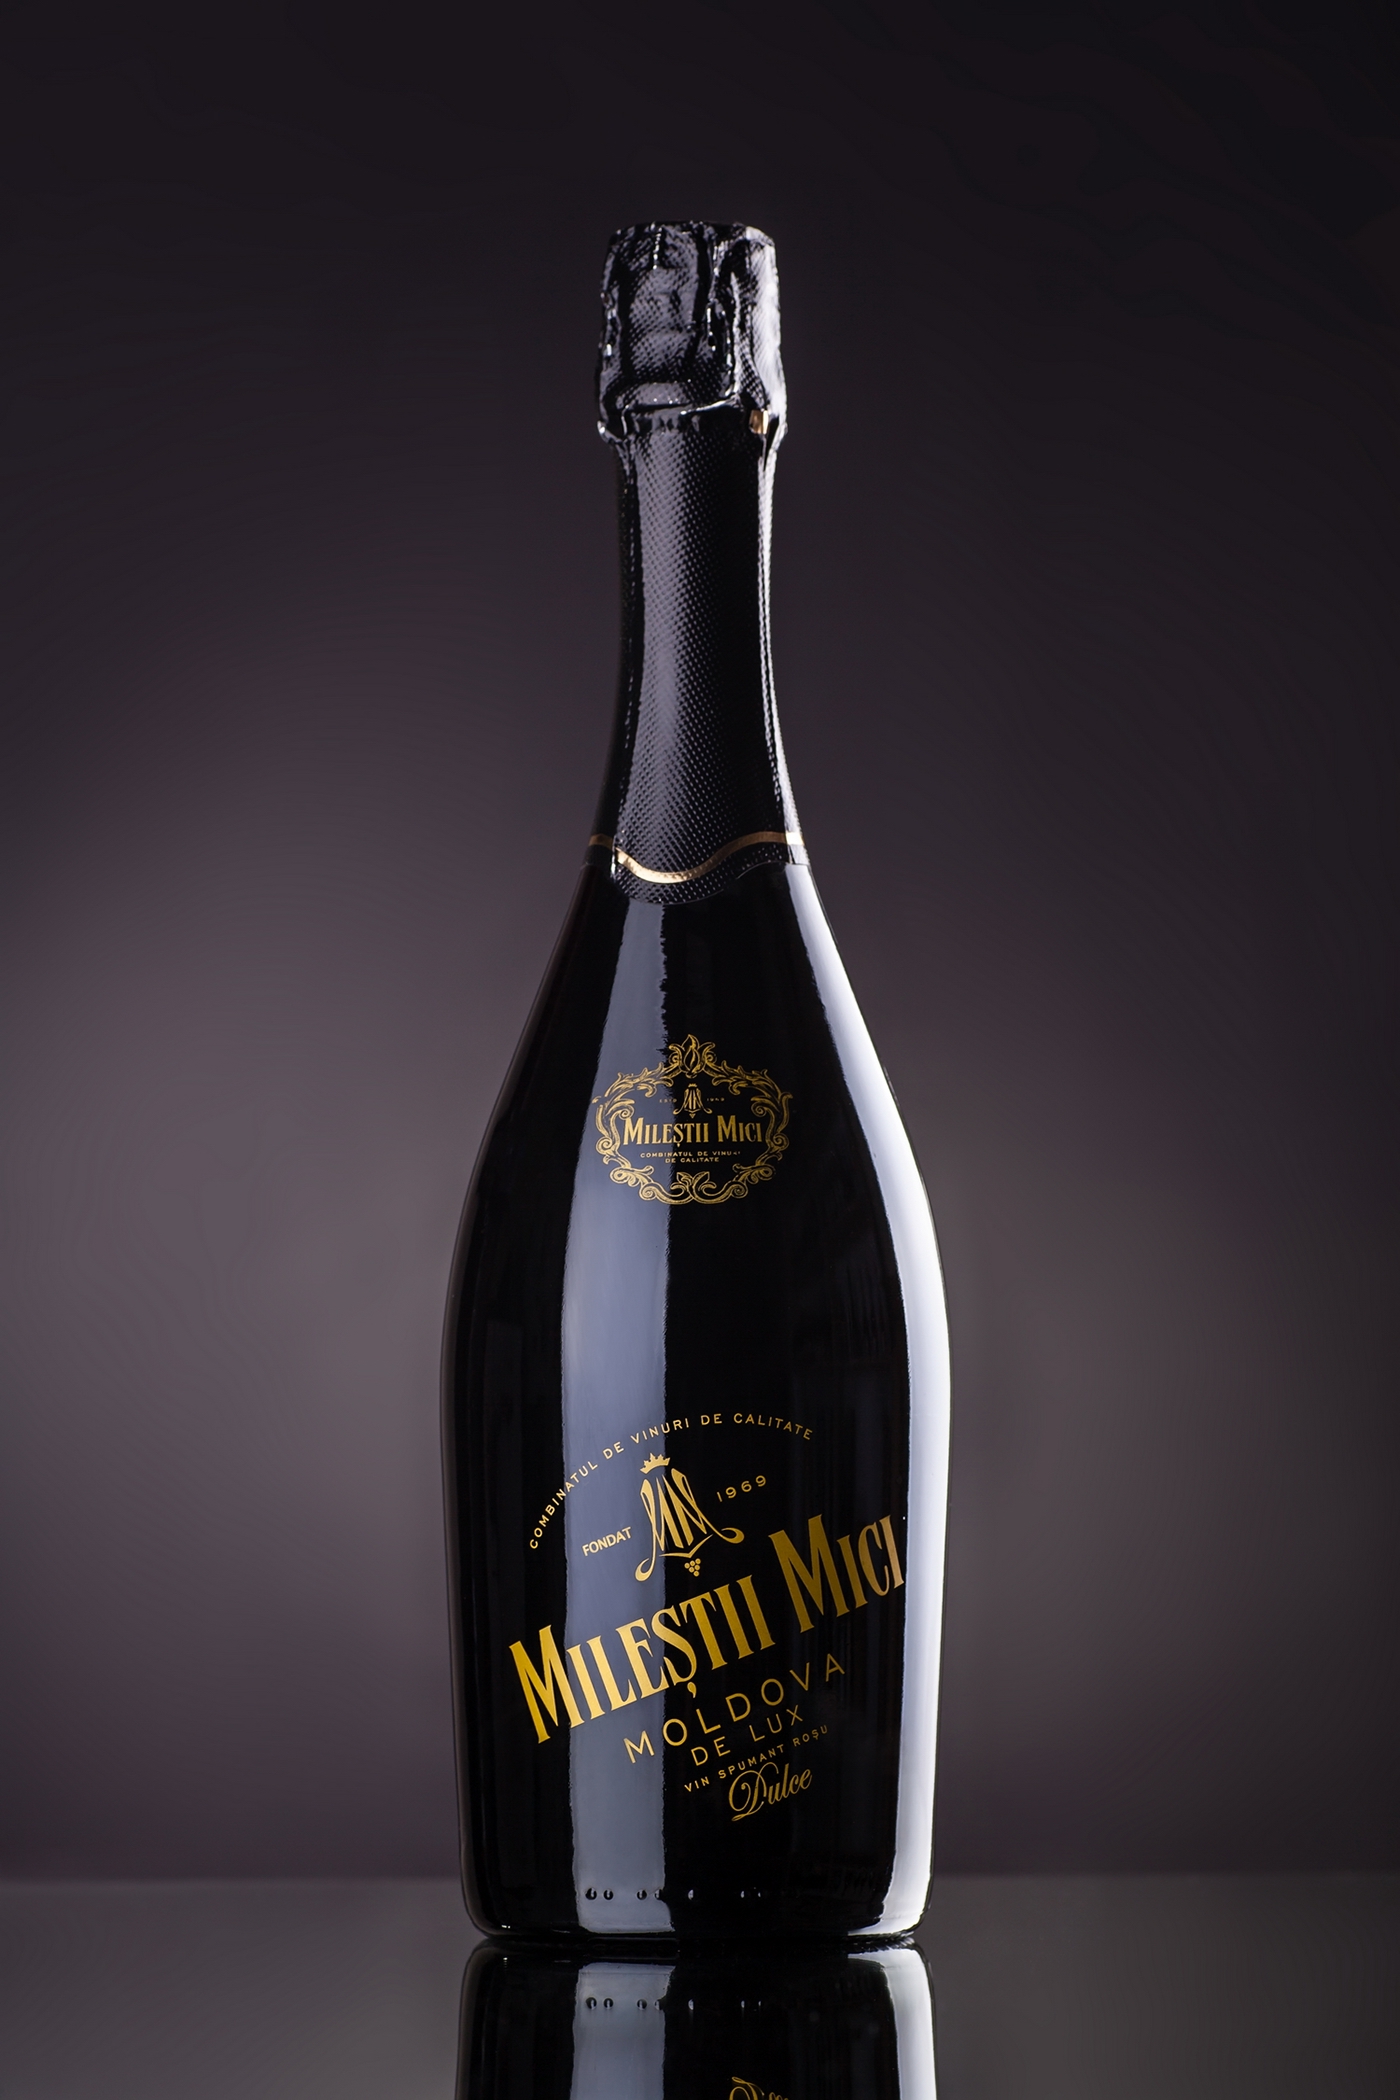 milestii mici sparkling wine 43oz Moldova packaging design graphic design  logo